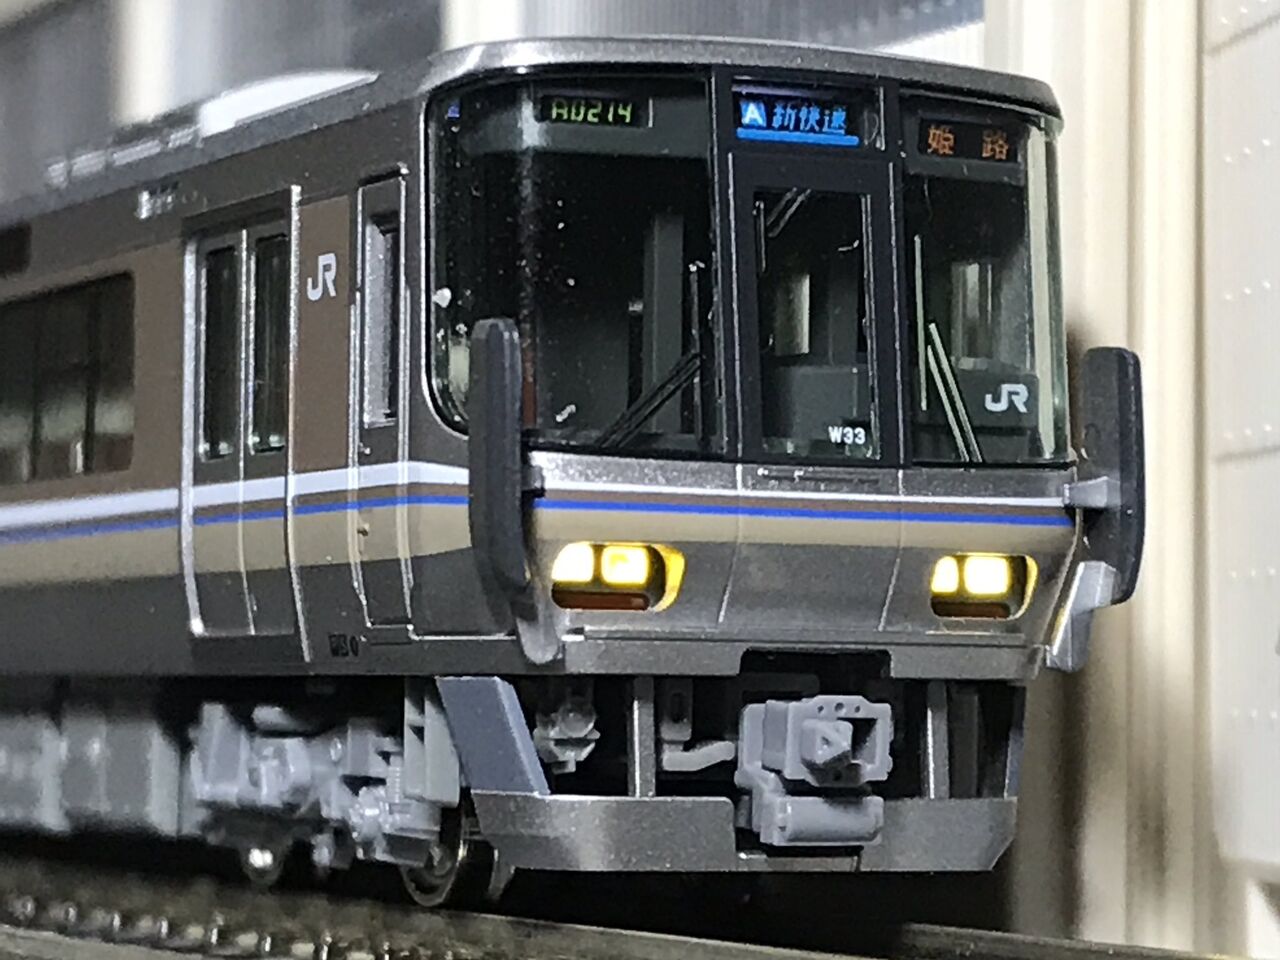 KATO 223系2000番台 新快速 入線 : 夏島鉄道